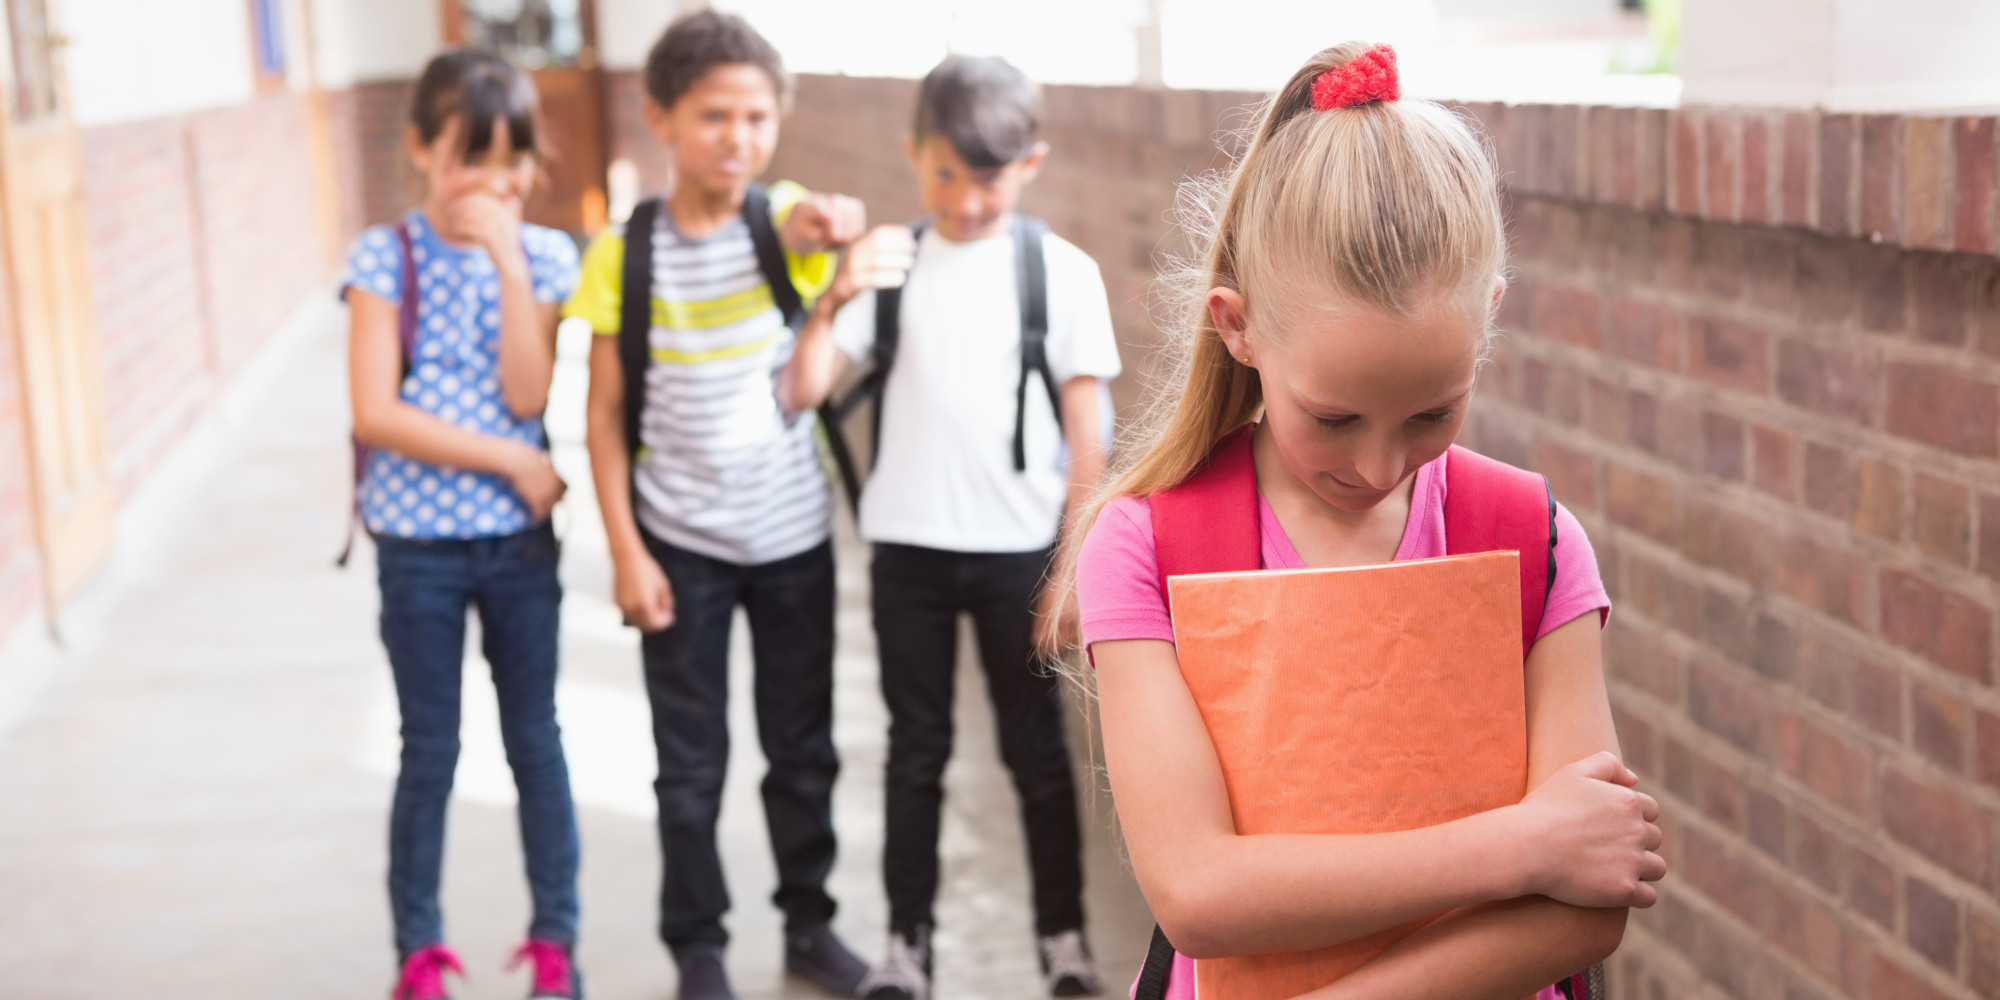  Campaña de Donald Trump provoca bullying en escuelas estadounidenses